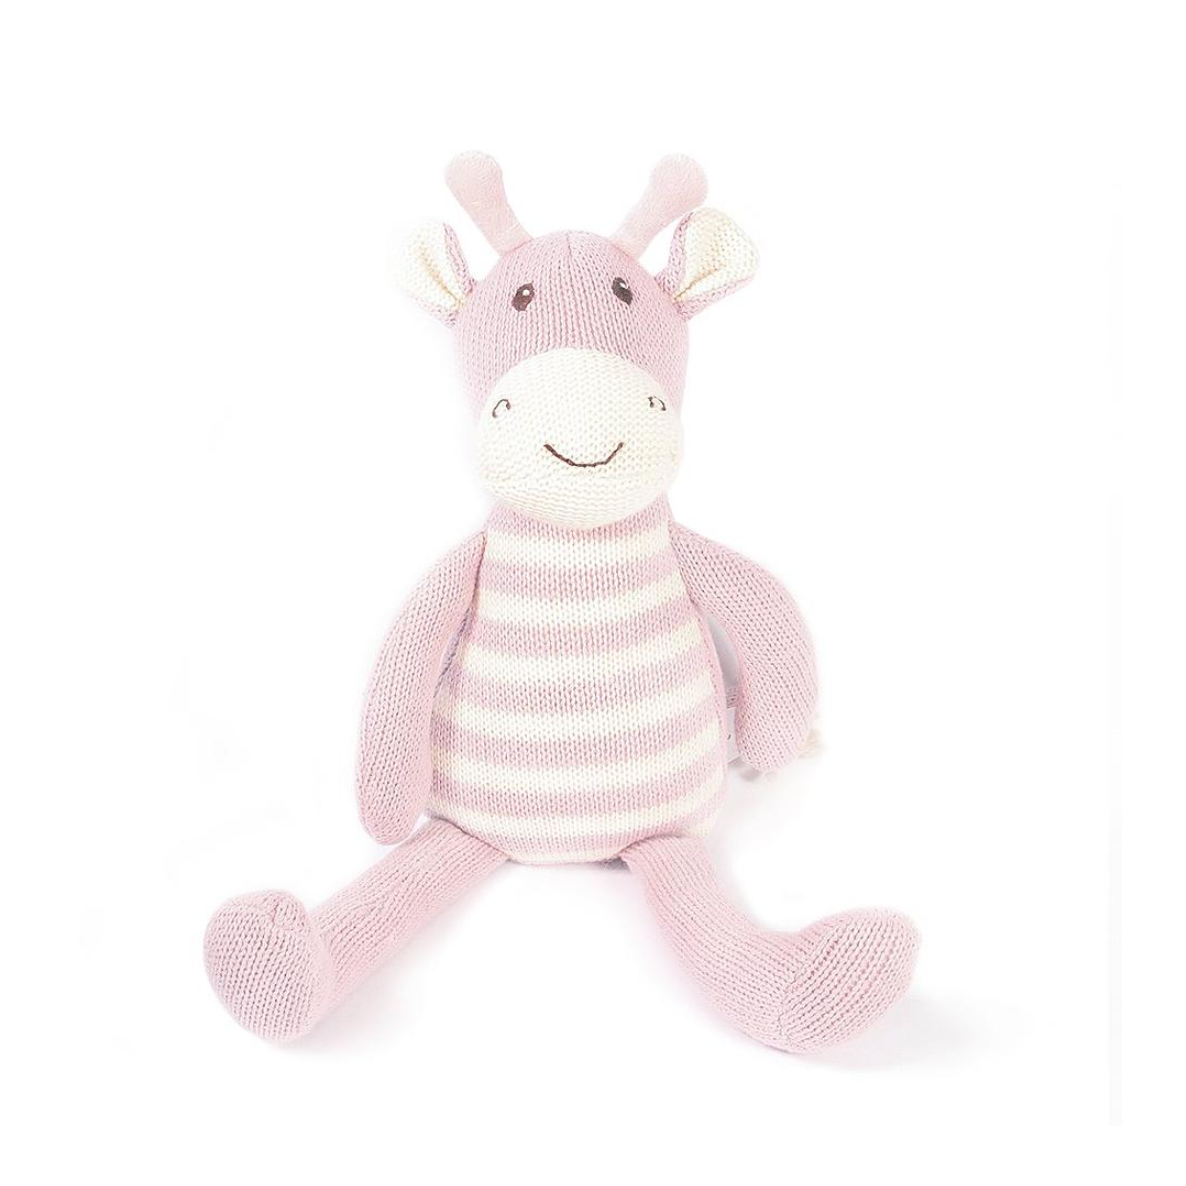 Cotton Knit Plush Toy - Pink - HoneyBug 